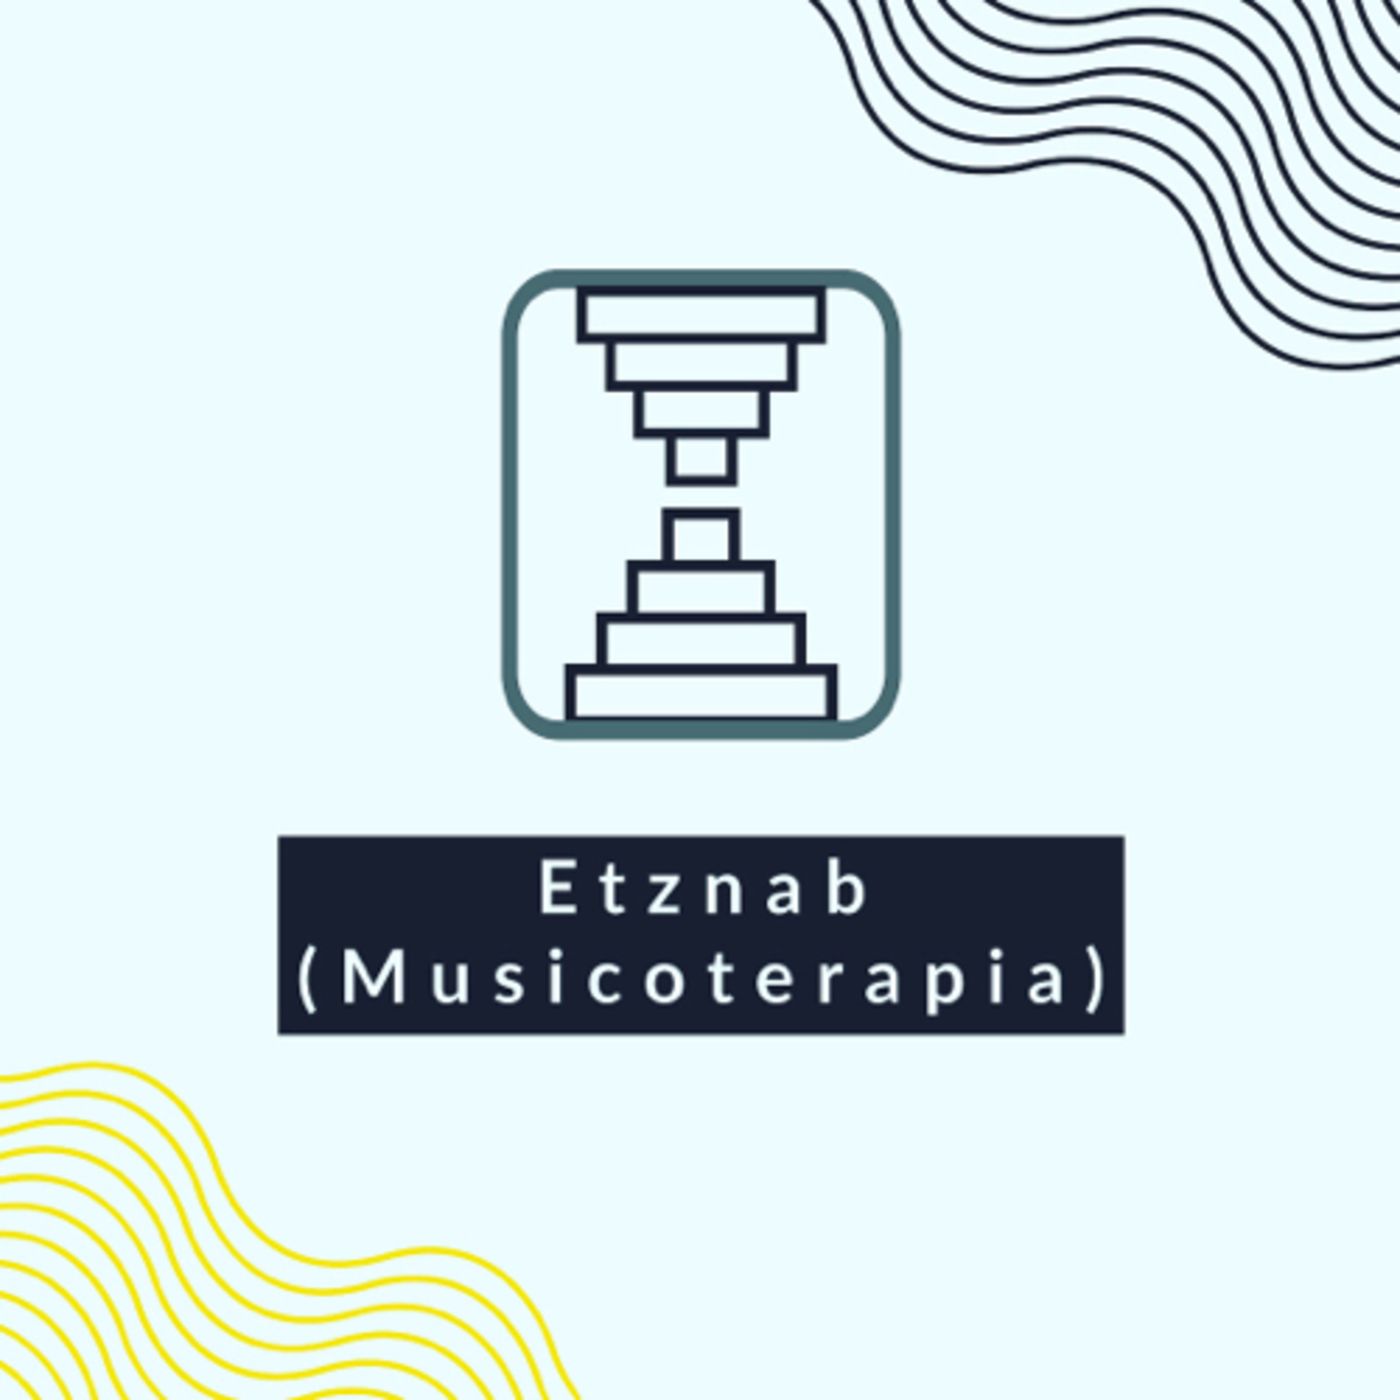 Etznab (Musicoterapia)